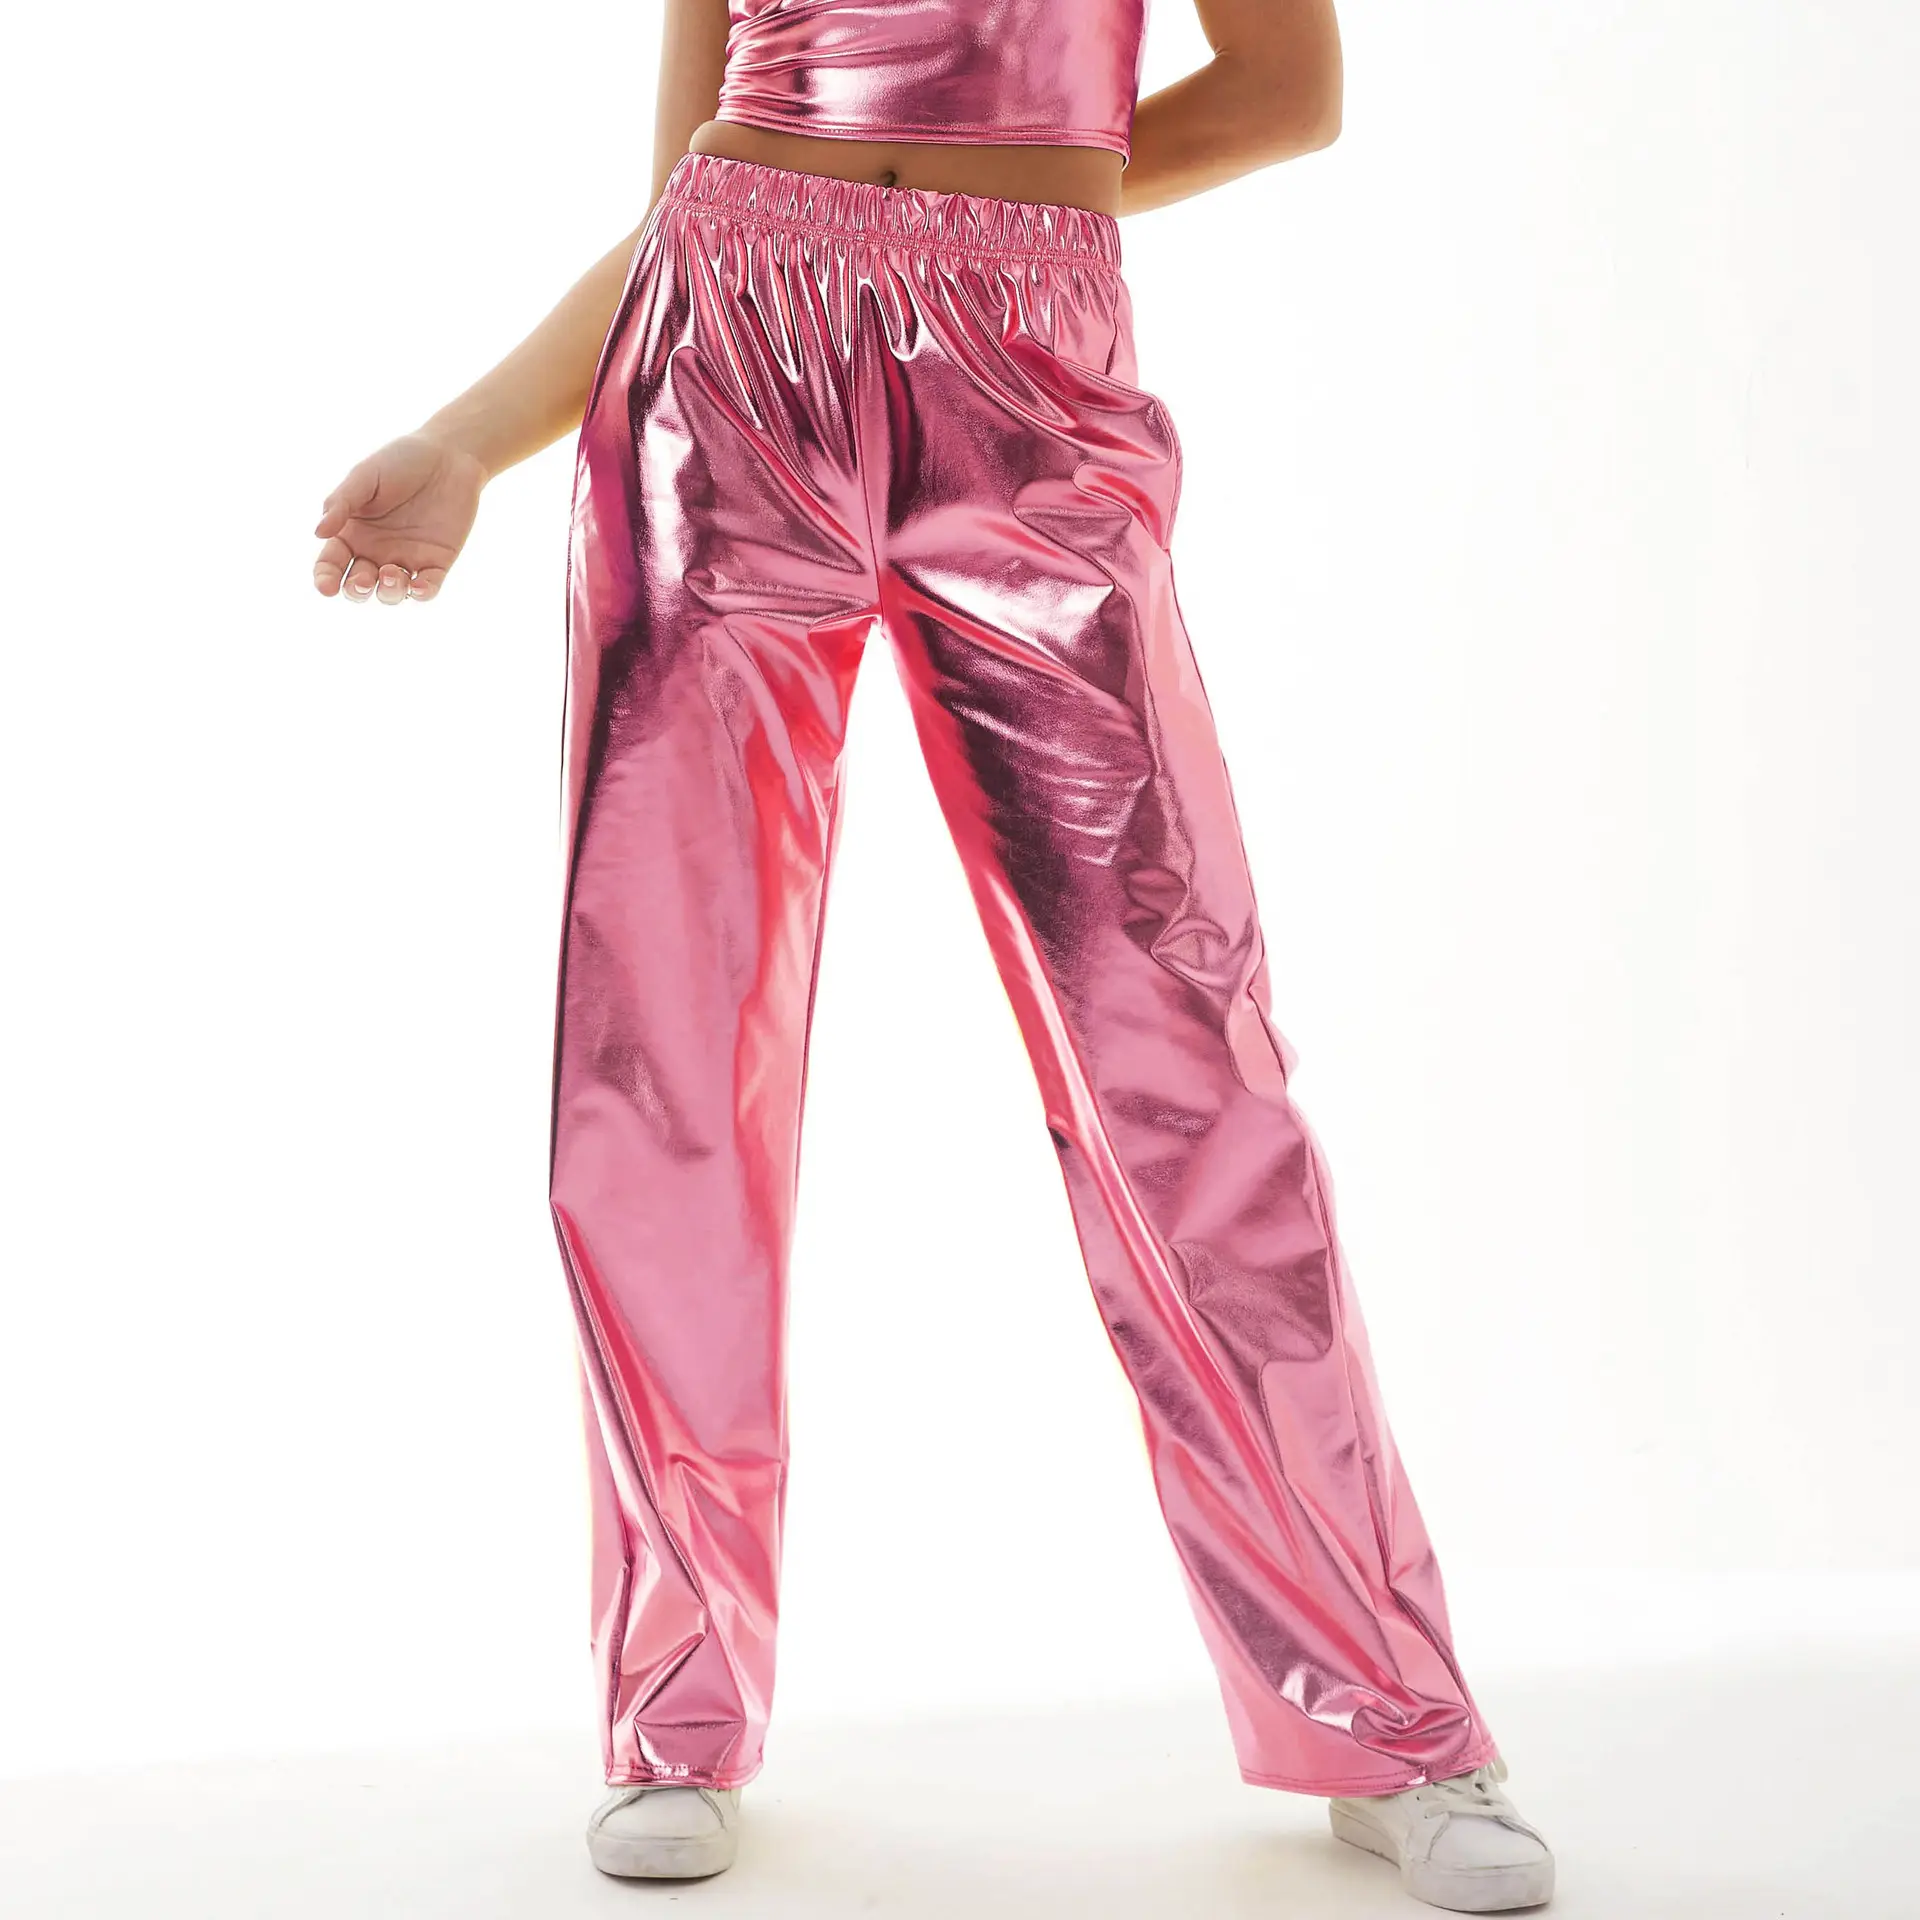 King Mcgreen star vendita calda donna Metallic shiny pantaloni larghi Casual hip hop jogger pantaloni sportivi Streetwear dance pants